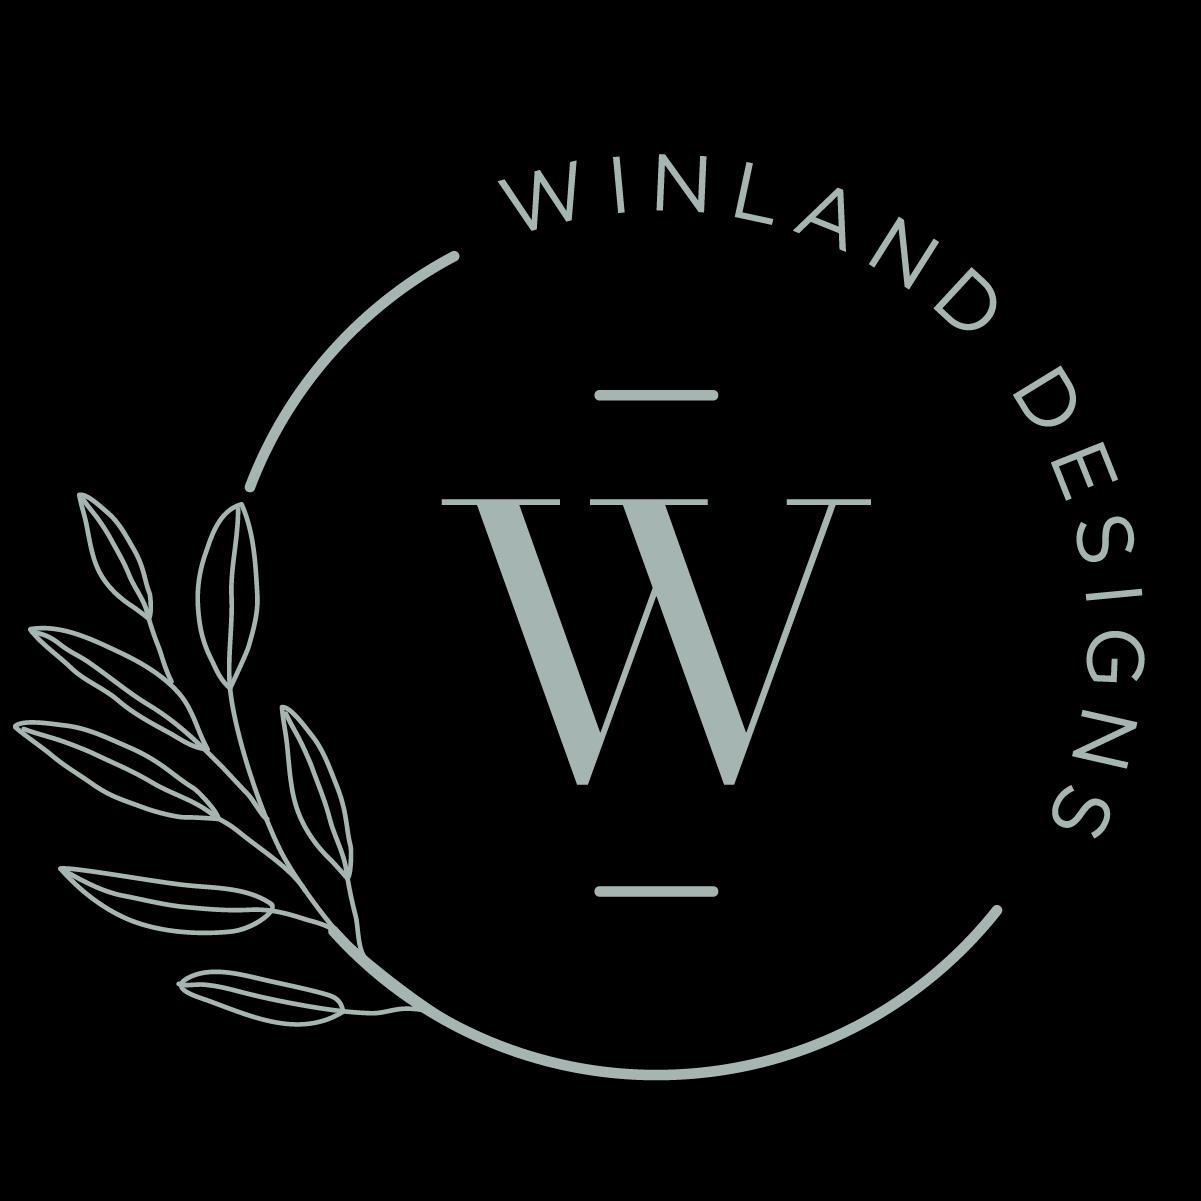 Winland Designs